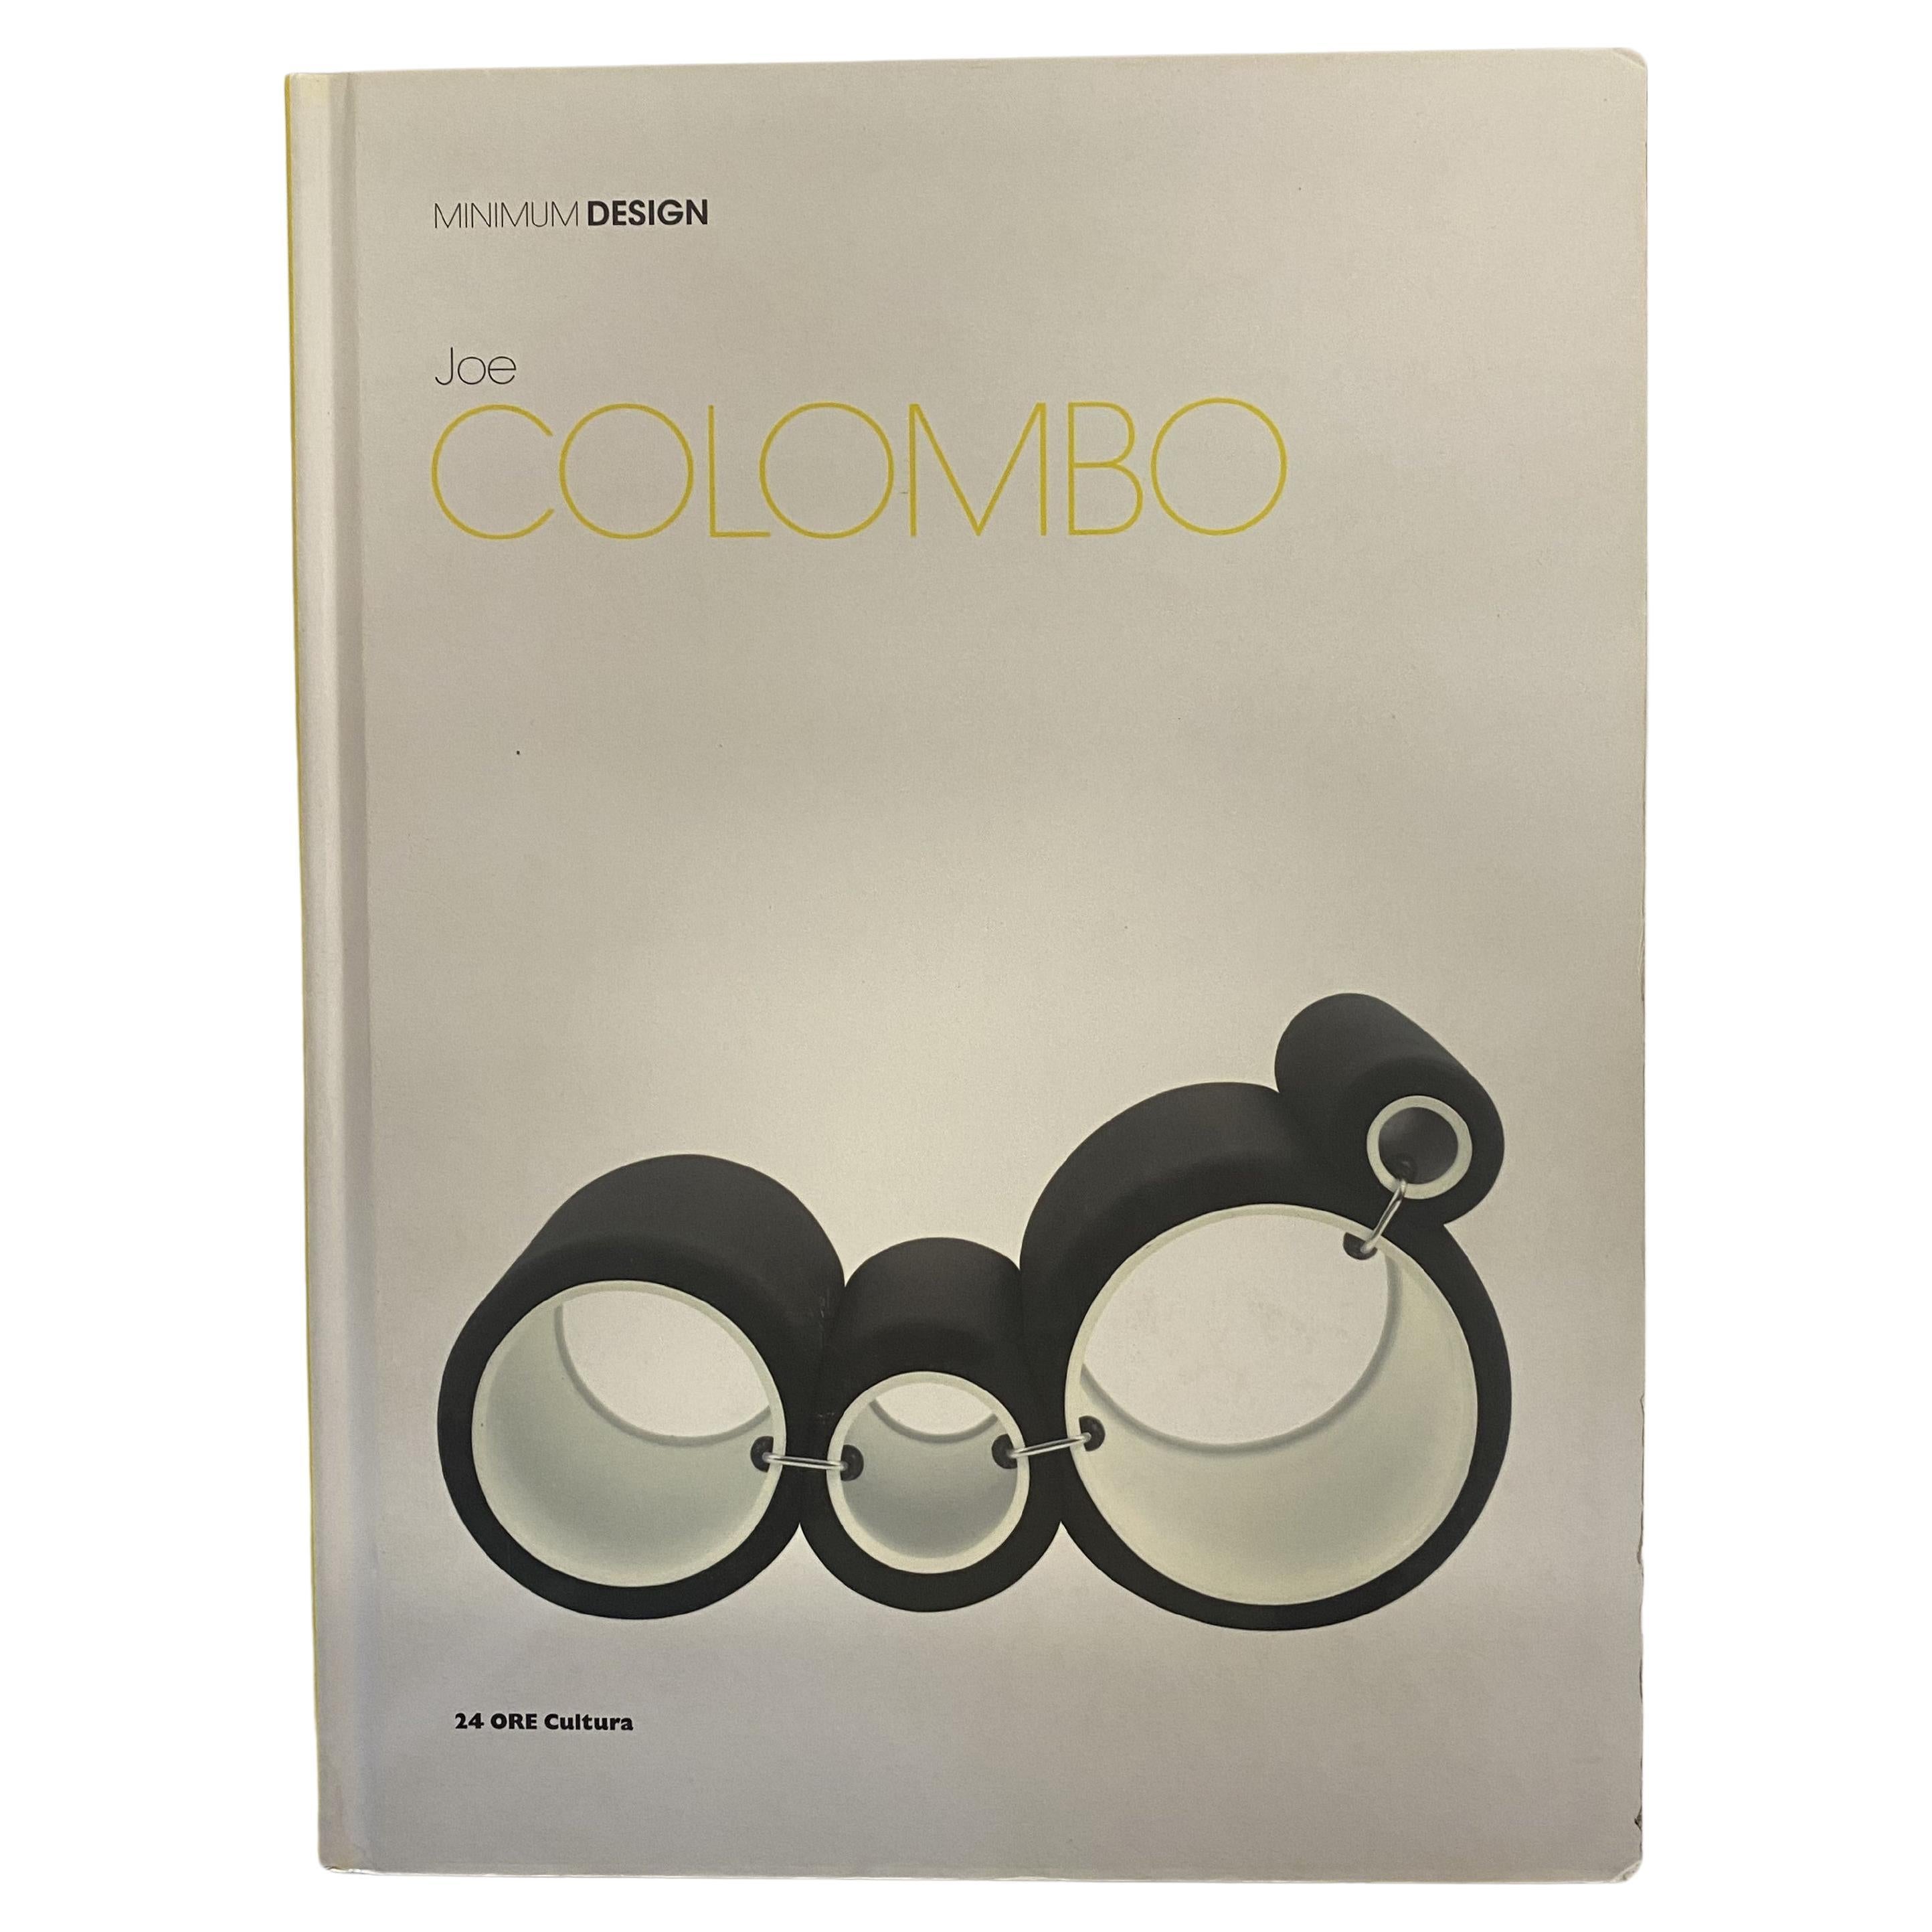 Joe Colombo: Minimum Design by Vittorio Fagone and Ignazia Favata (Book)